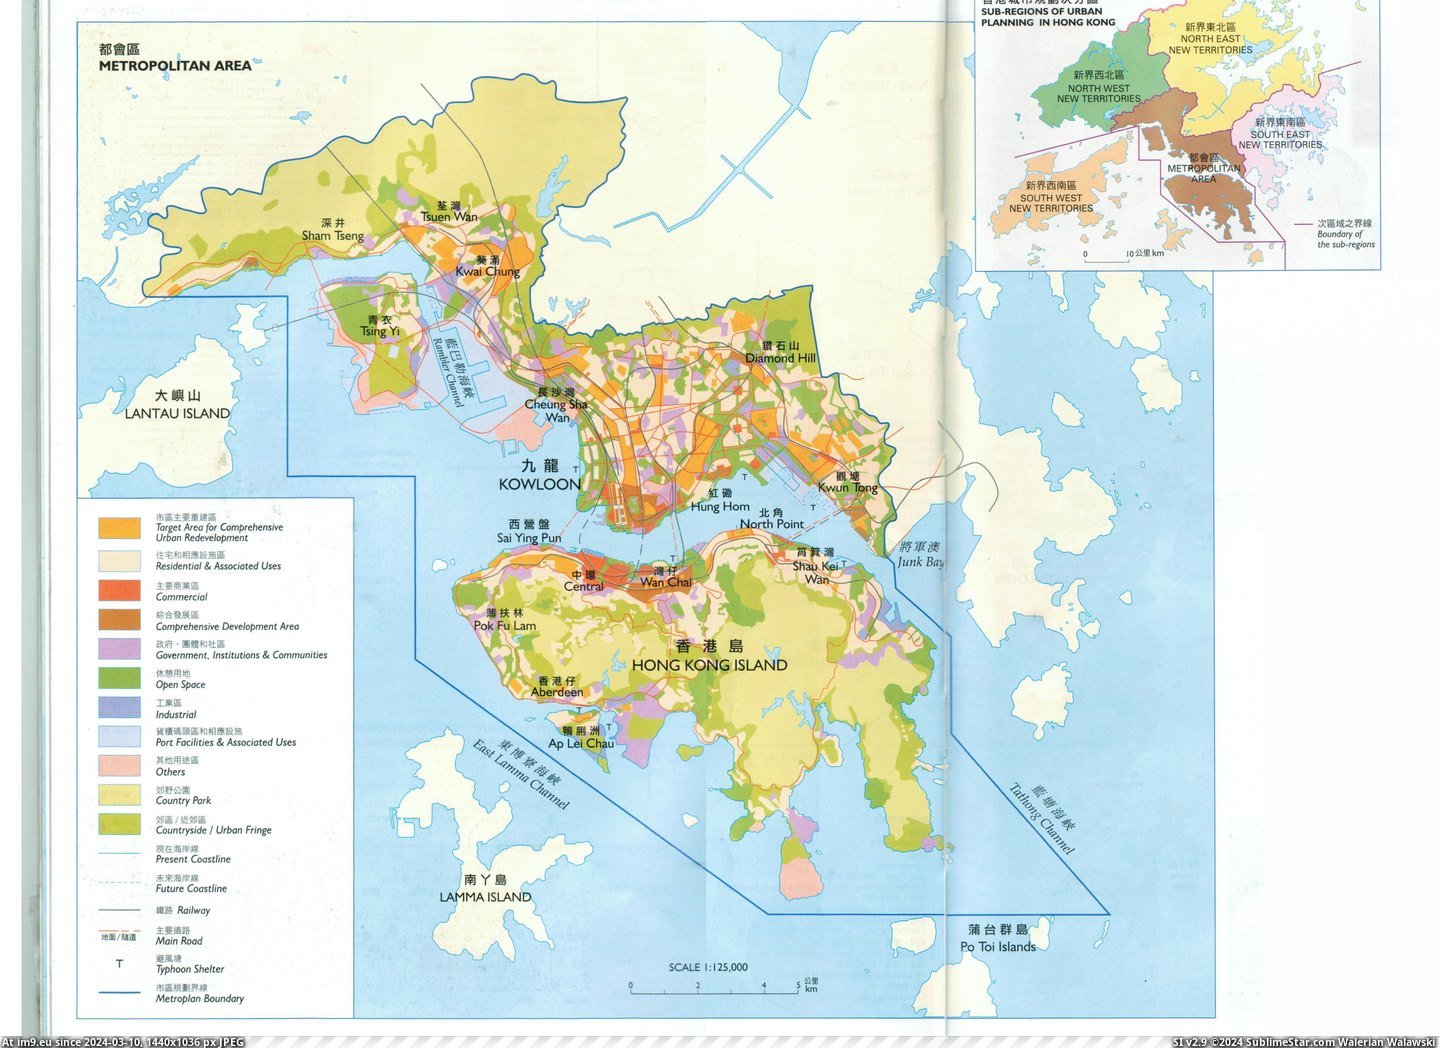 #Metropolitan #Area #Kong #Land #Hong [Mapporn] Land Use of the Metropolitan Area of Hong Kong [4076x2945] Pic. (Bild von album My r/MAPS favs))